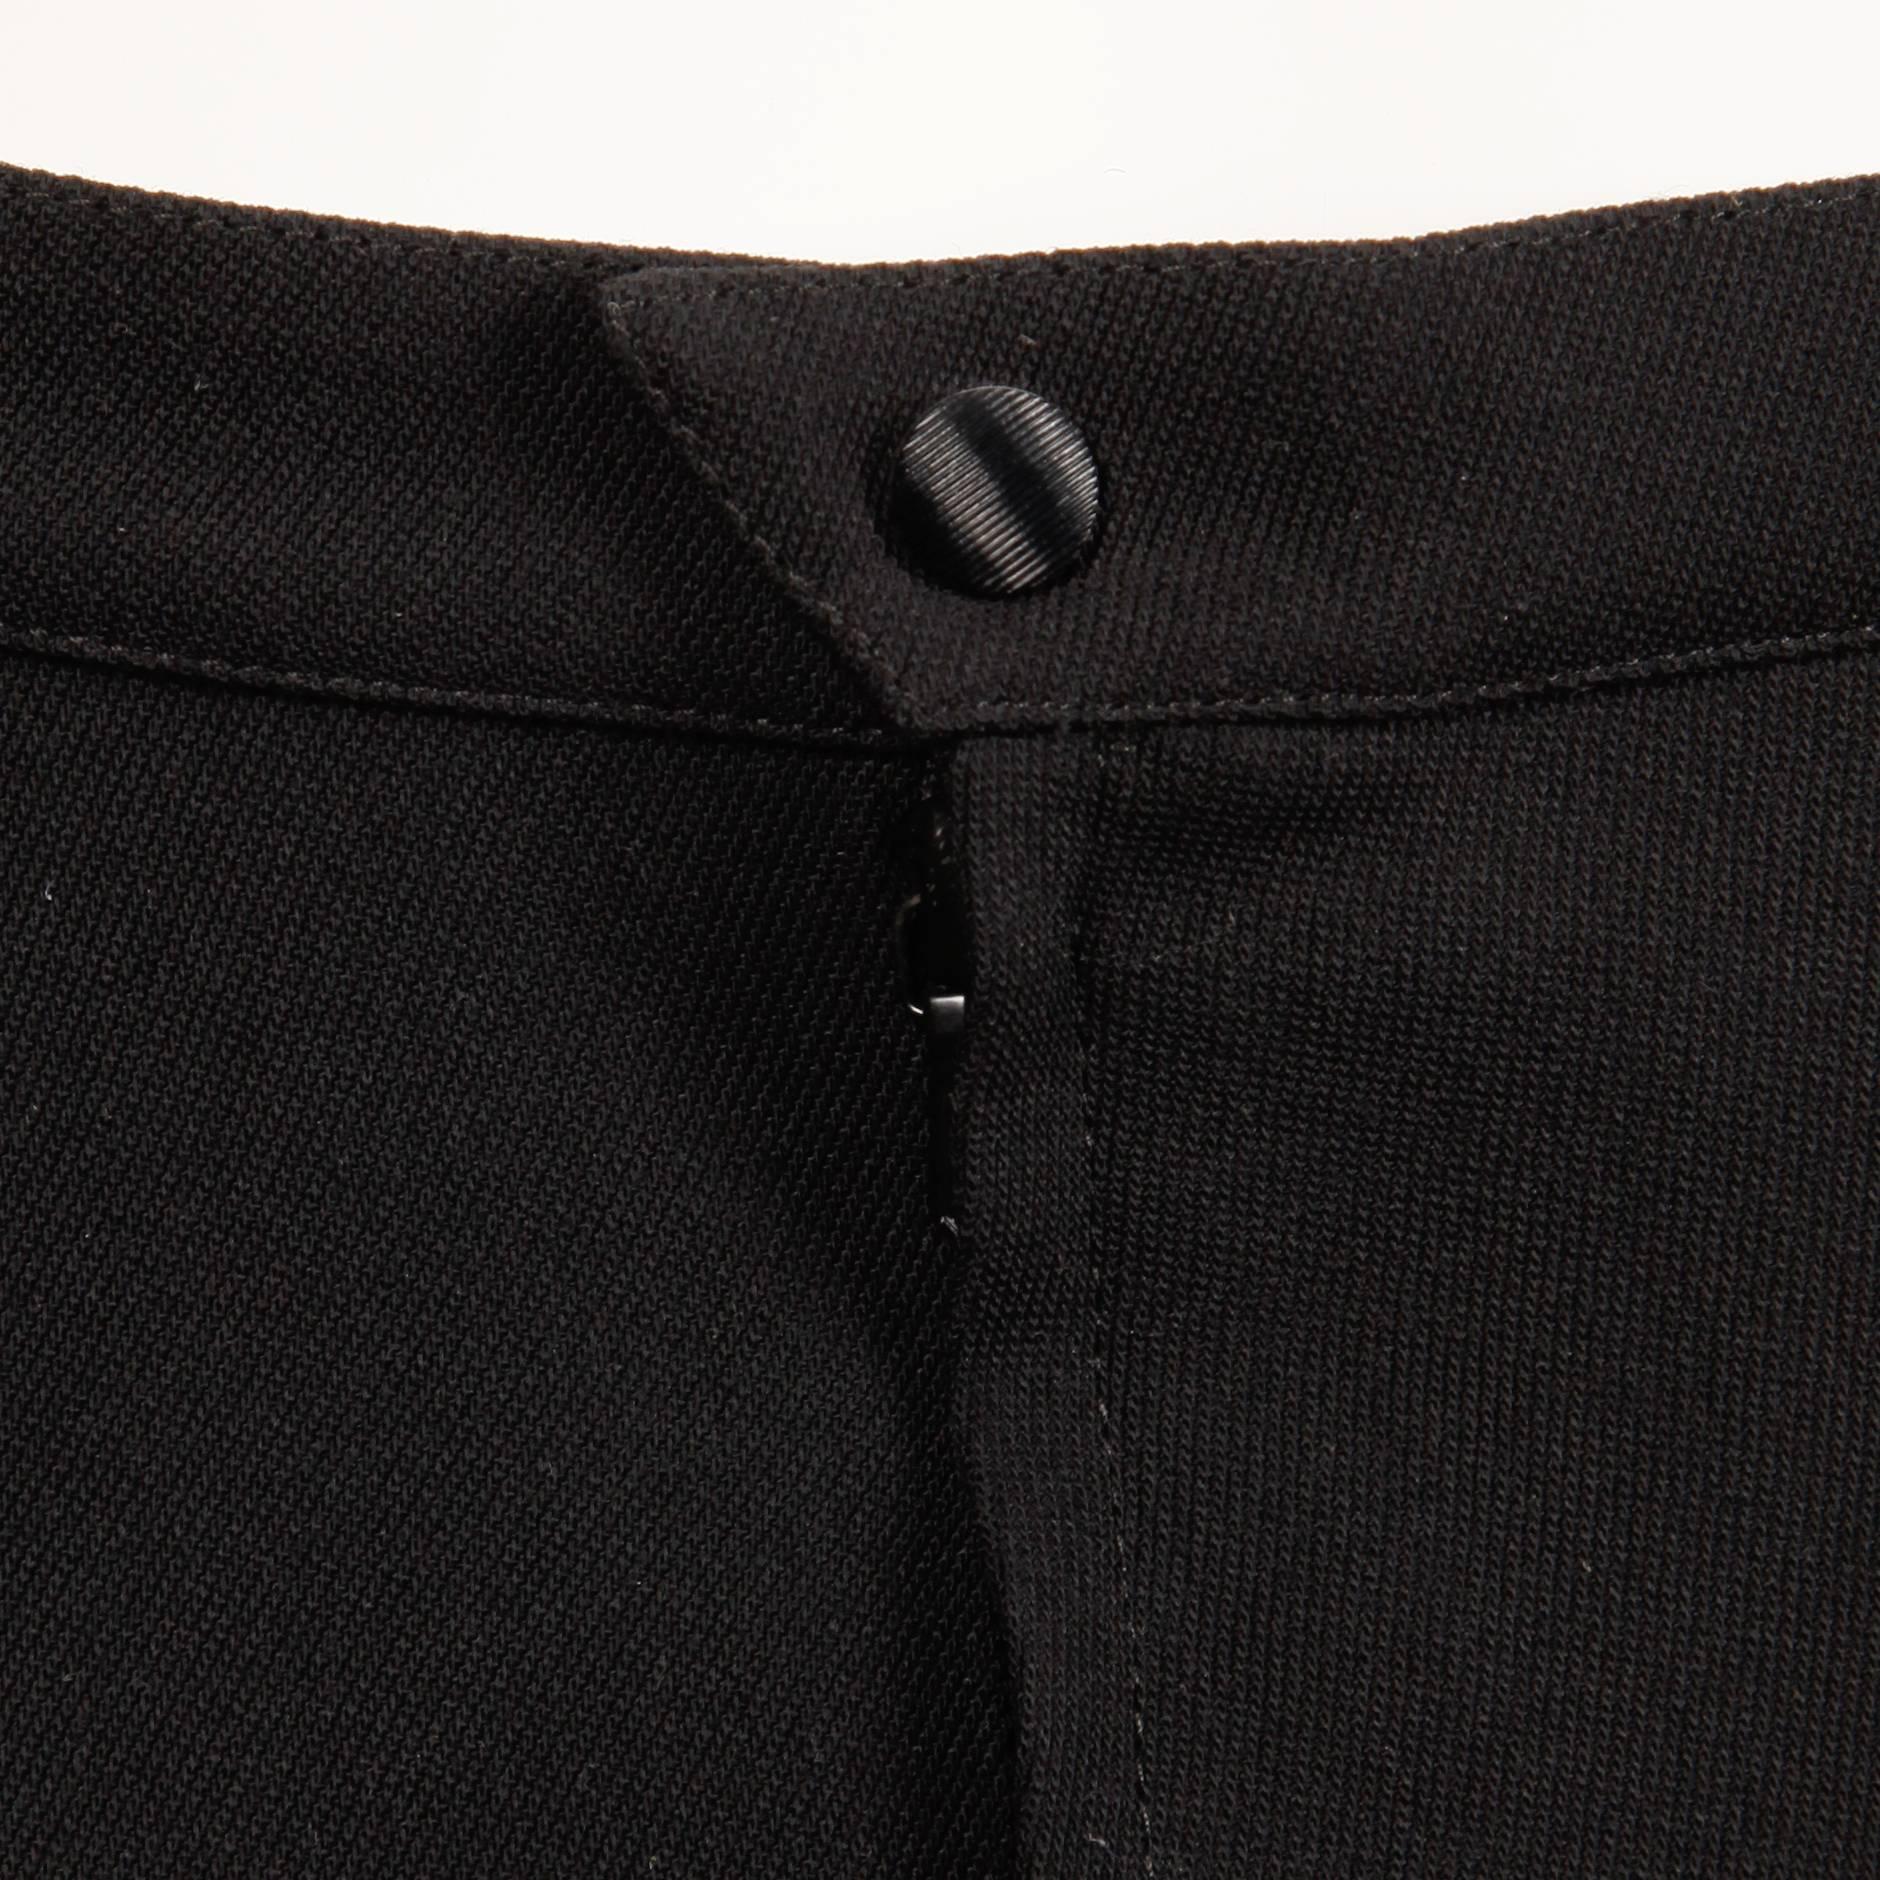 1980s Thierry Mugler Vintage Black Wool Jacket + Skirt Suit 2-Pc ...